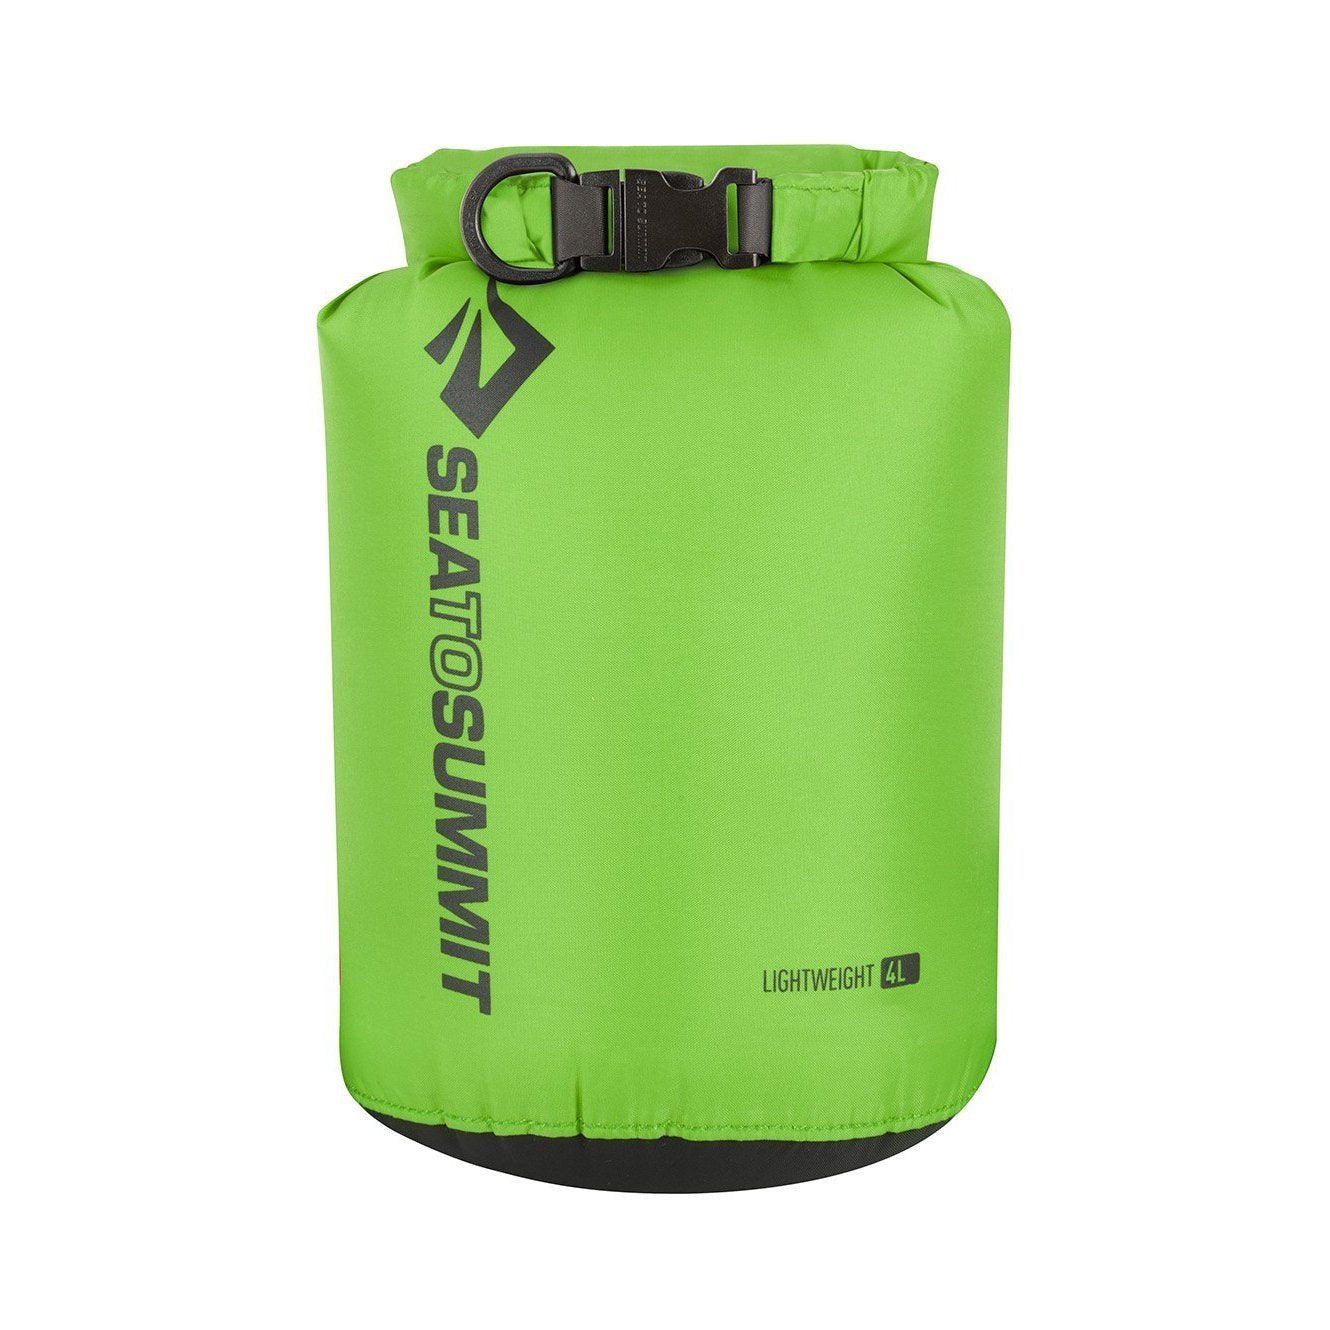 Sea to Summit Lightweight Waterproof Dry Bag 4 Liter Green